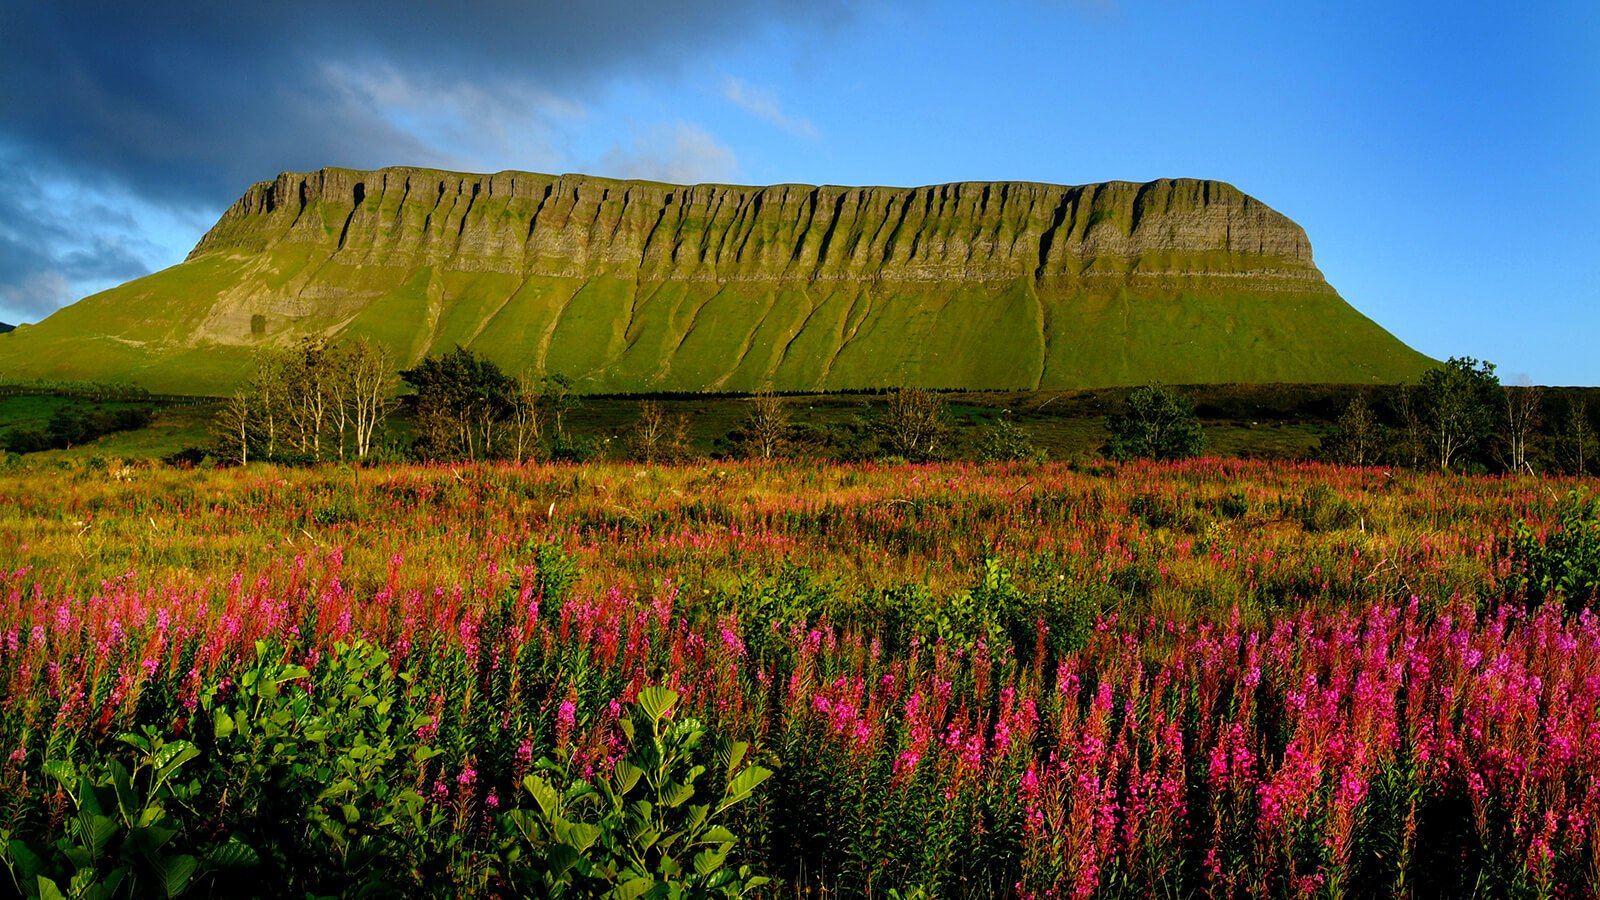 Ben Bulben Mountain with wildflowers in the foreground in Sligo, Ireland